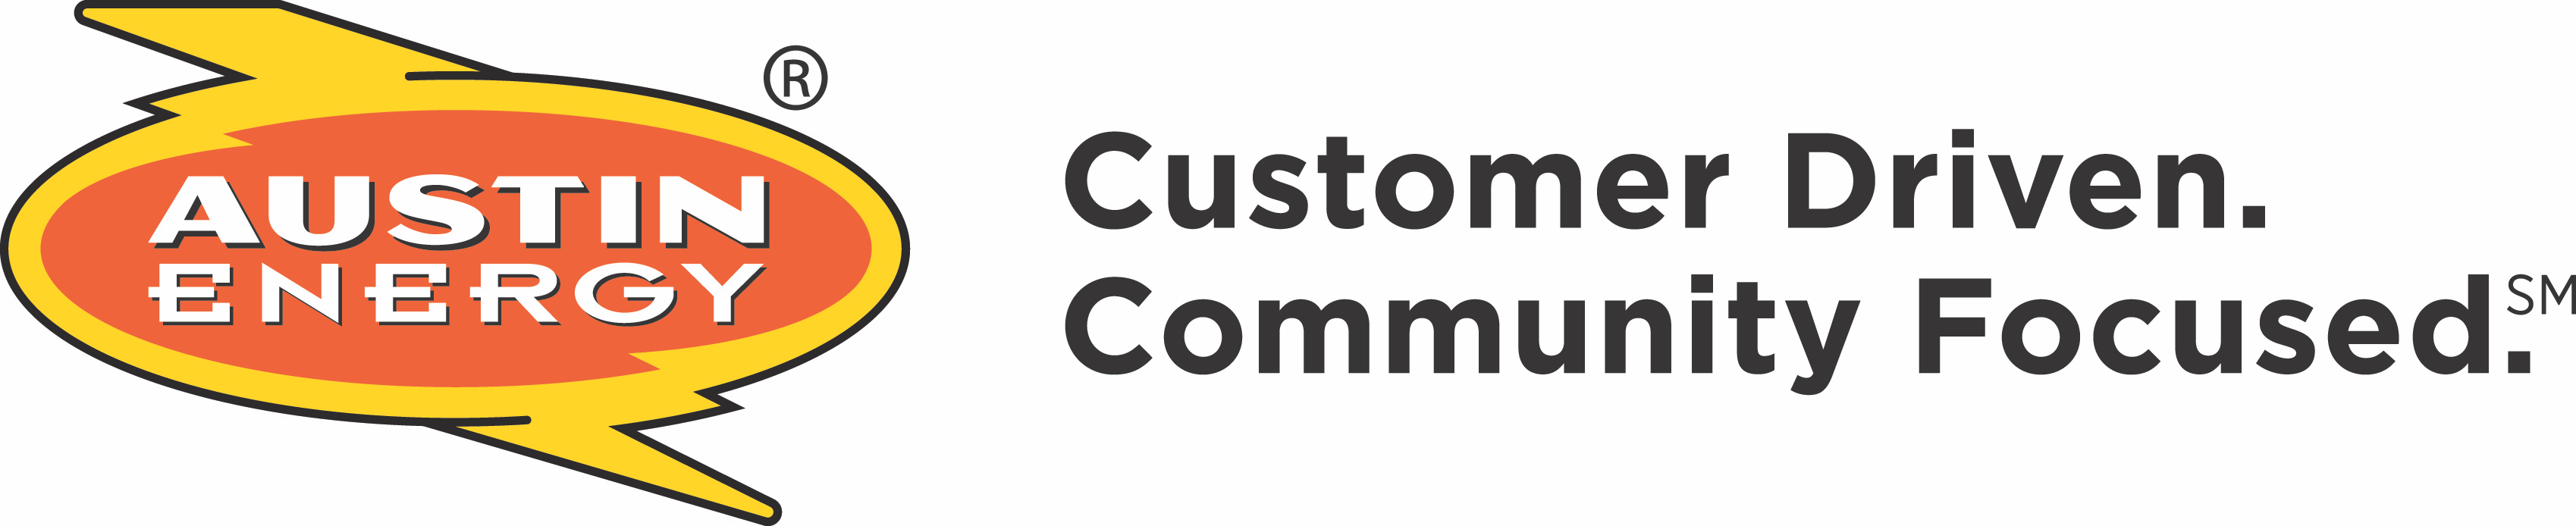 Austin Energy logo: Customer Driven. Community Focused